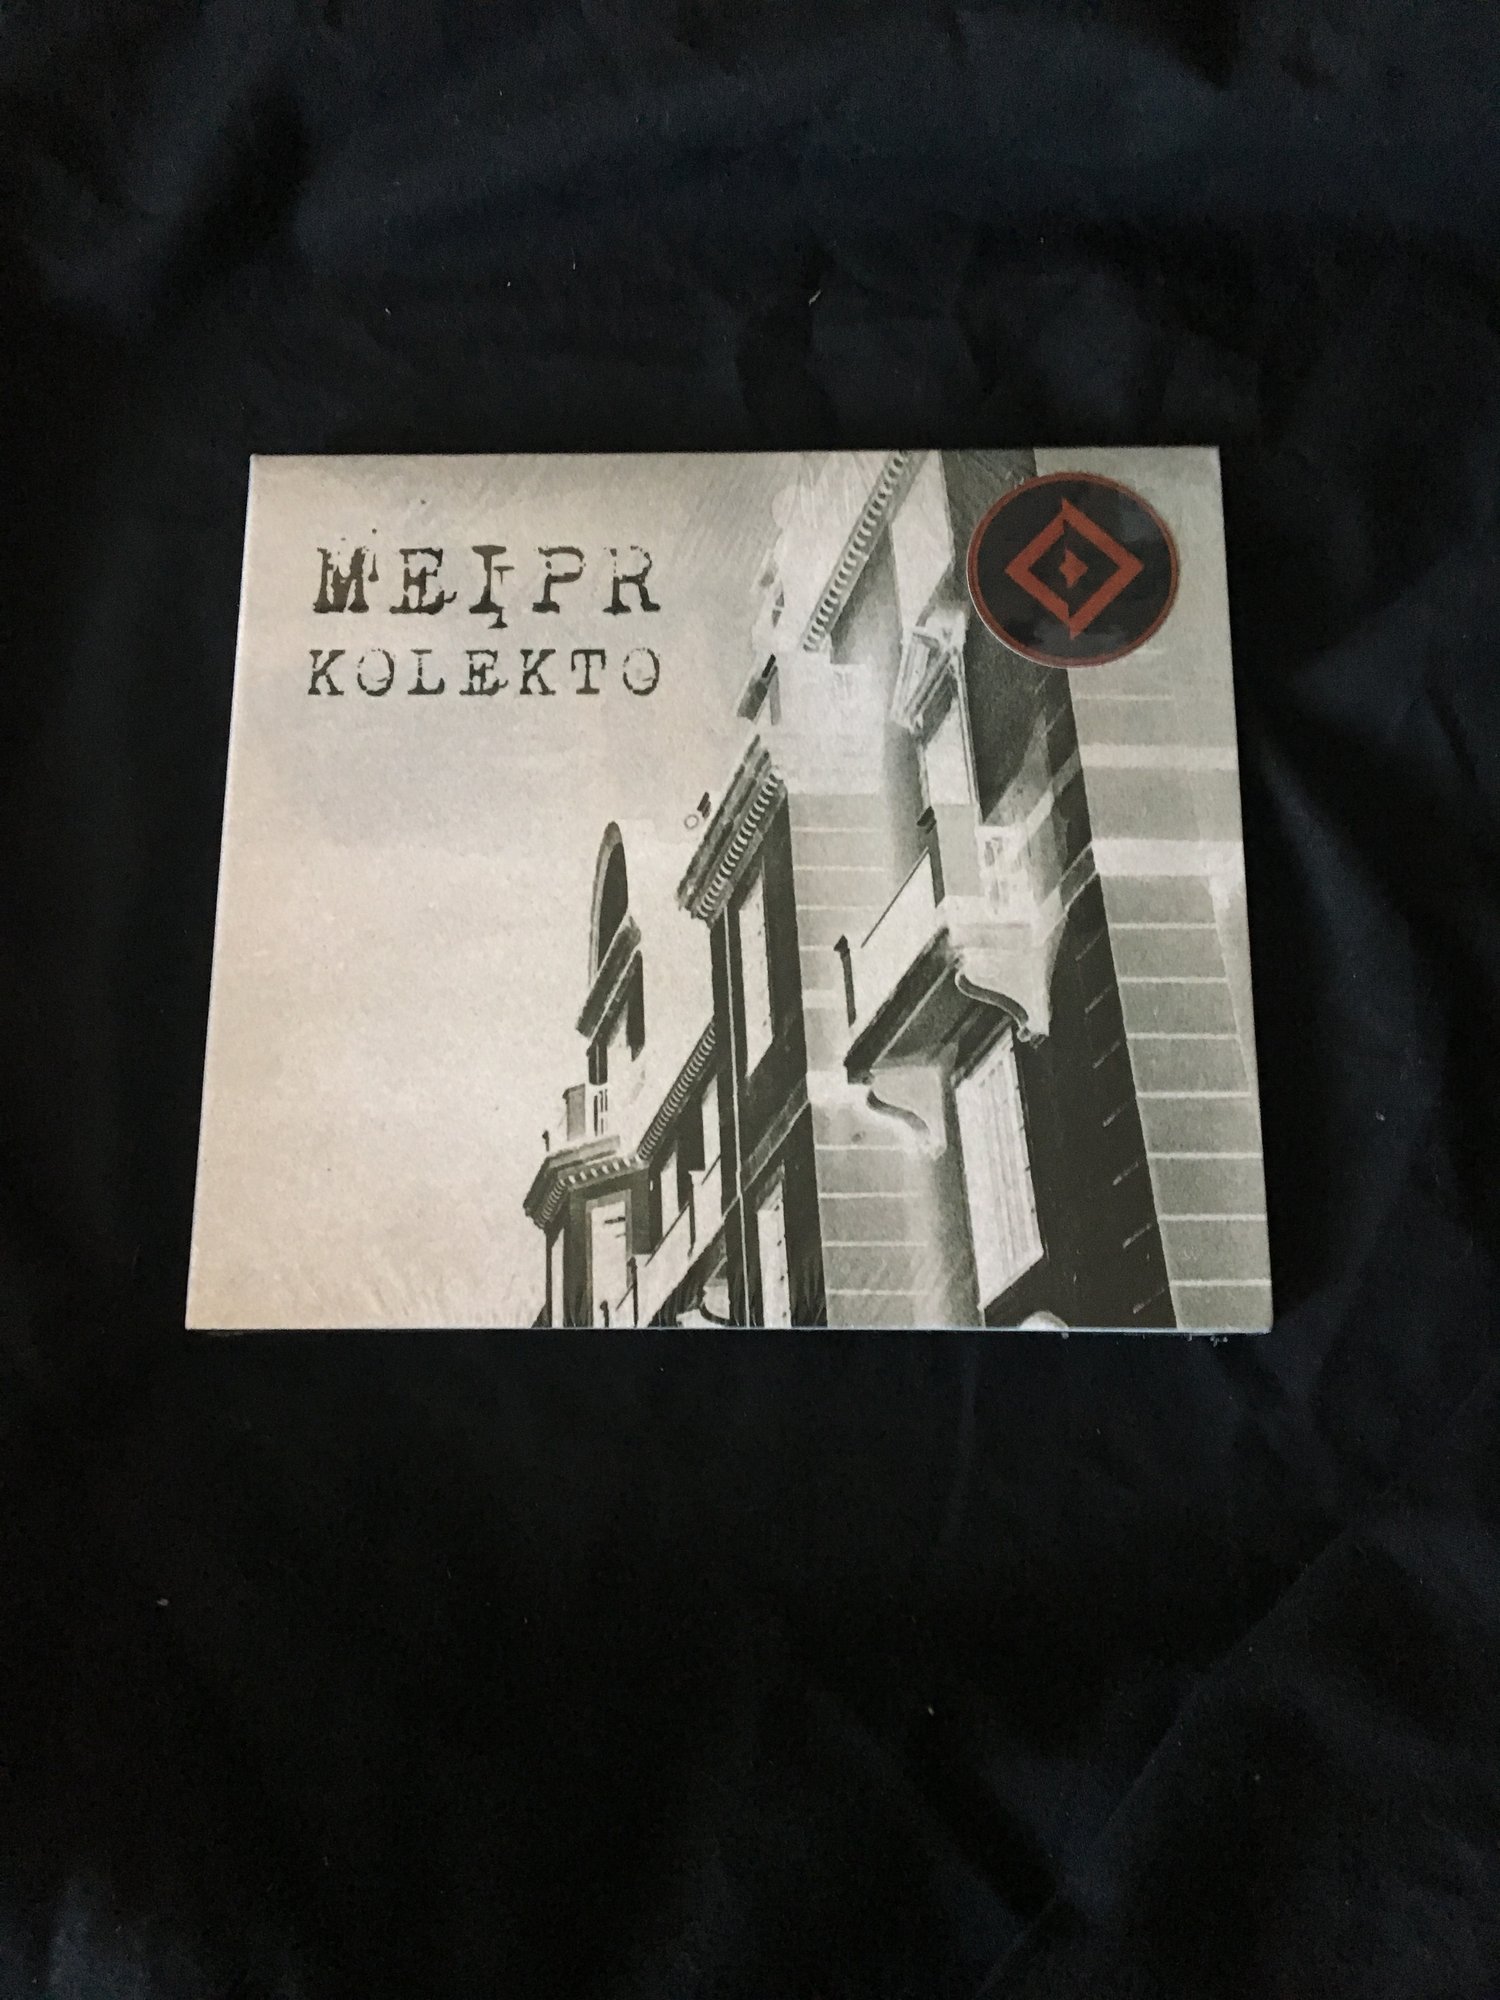 Meipr - Kolekto CD (Alvaret Tape Rekordings)